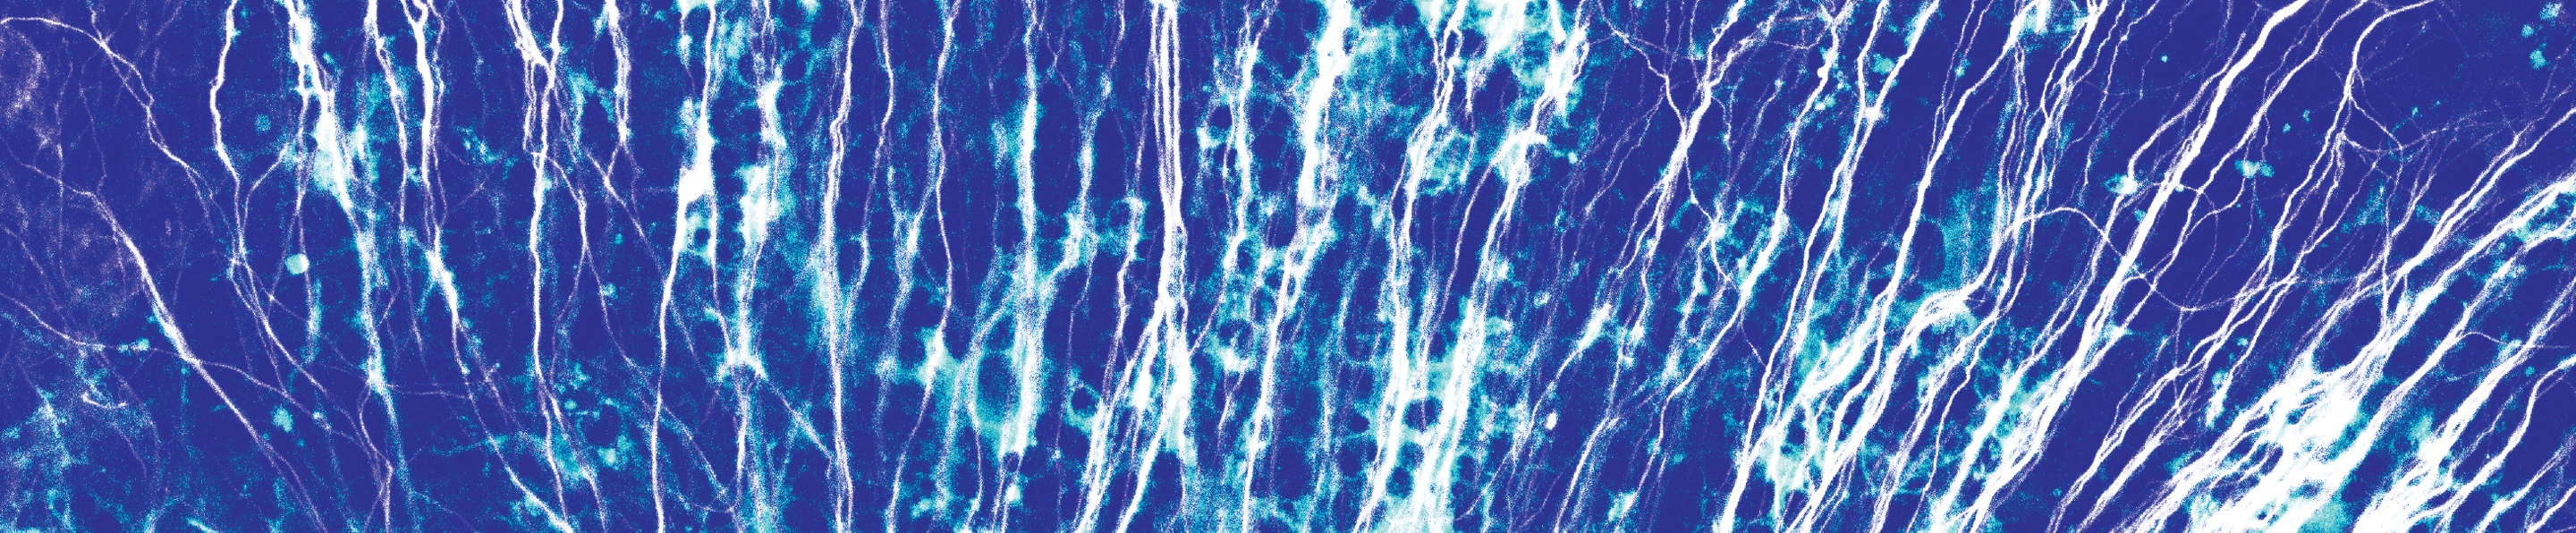 Close-up of a microscope slide, resembling lighting streaks